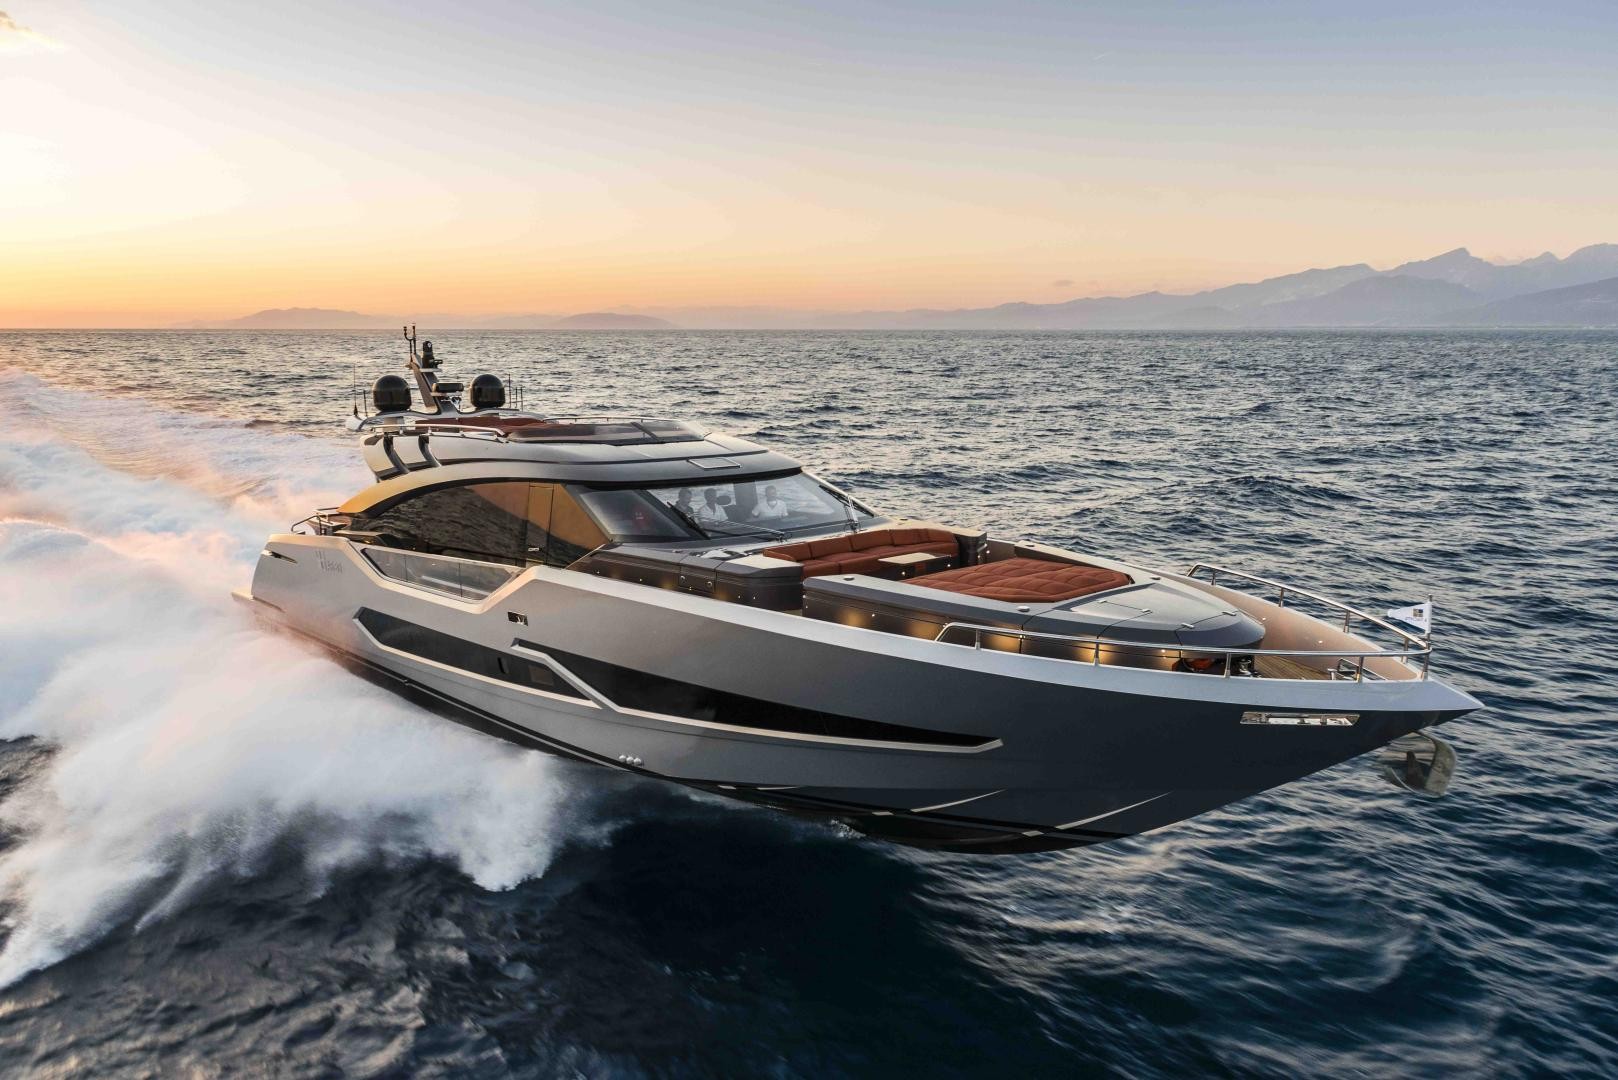 AB Yachts AB 80 e Maiora 35 Exuma del Gruppo FIPA premiati a Cannes